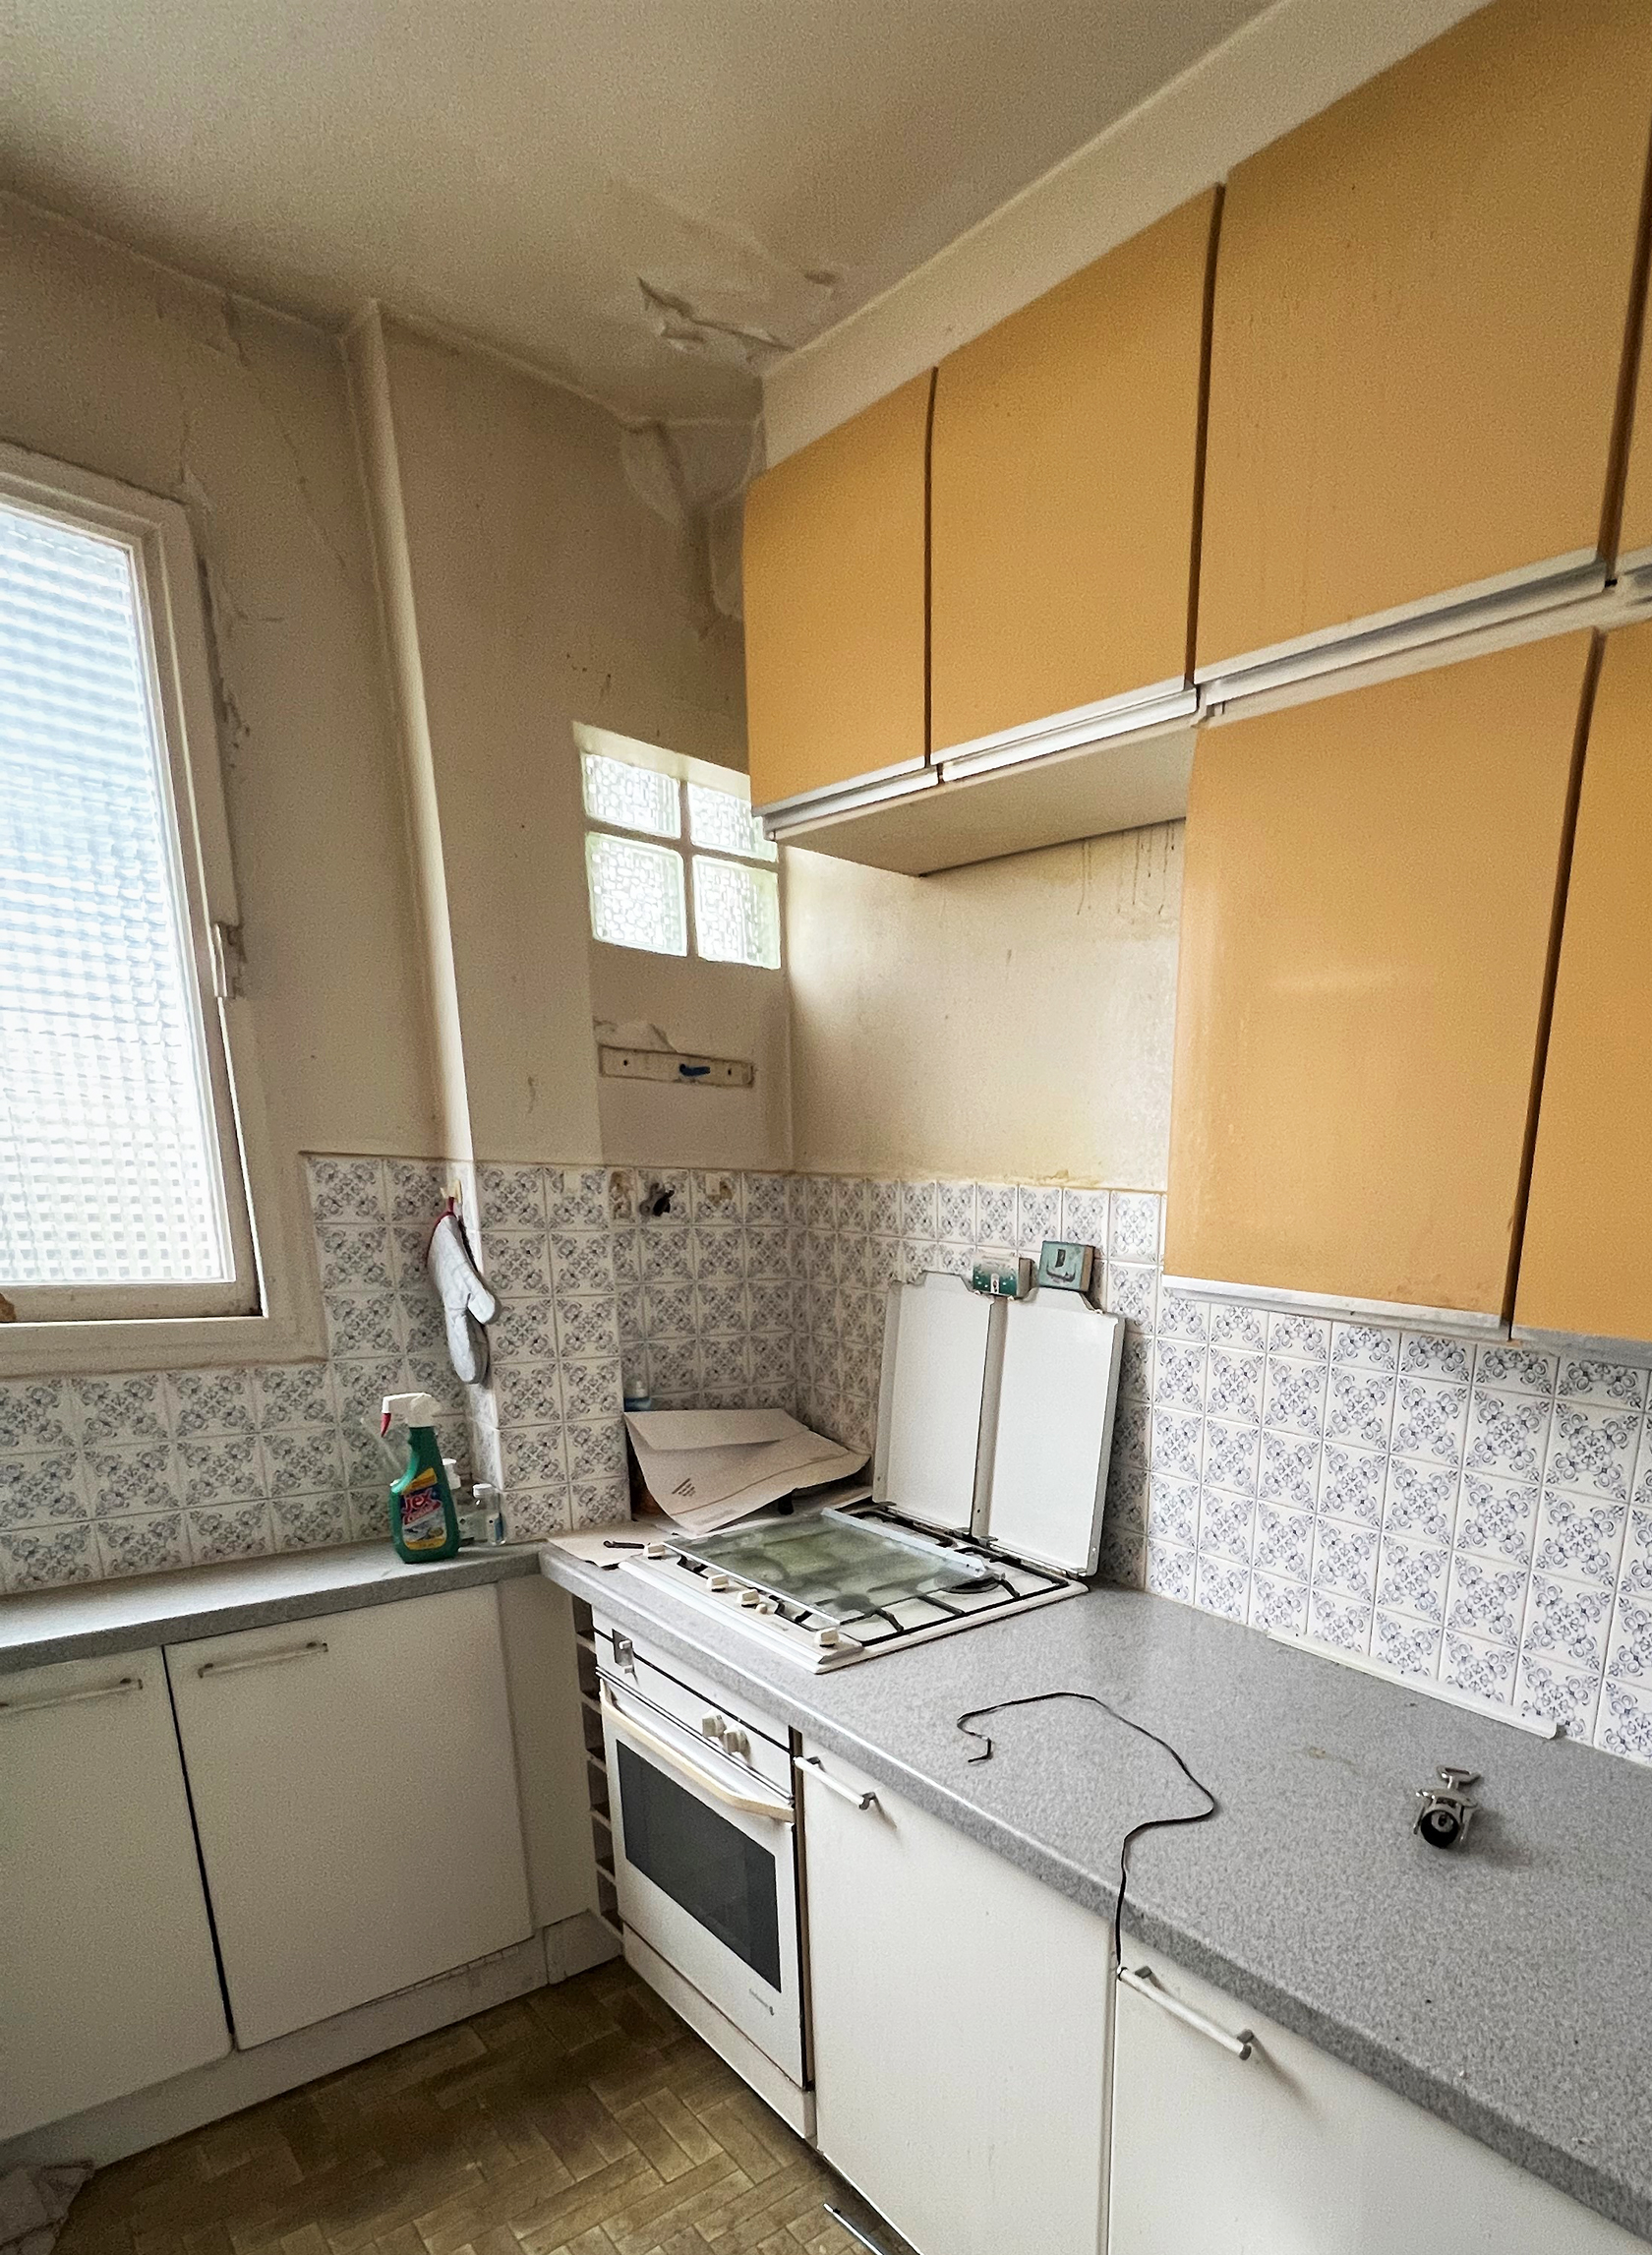 Paris kitchen and bathroom remodel